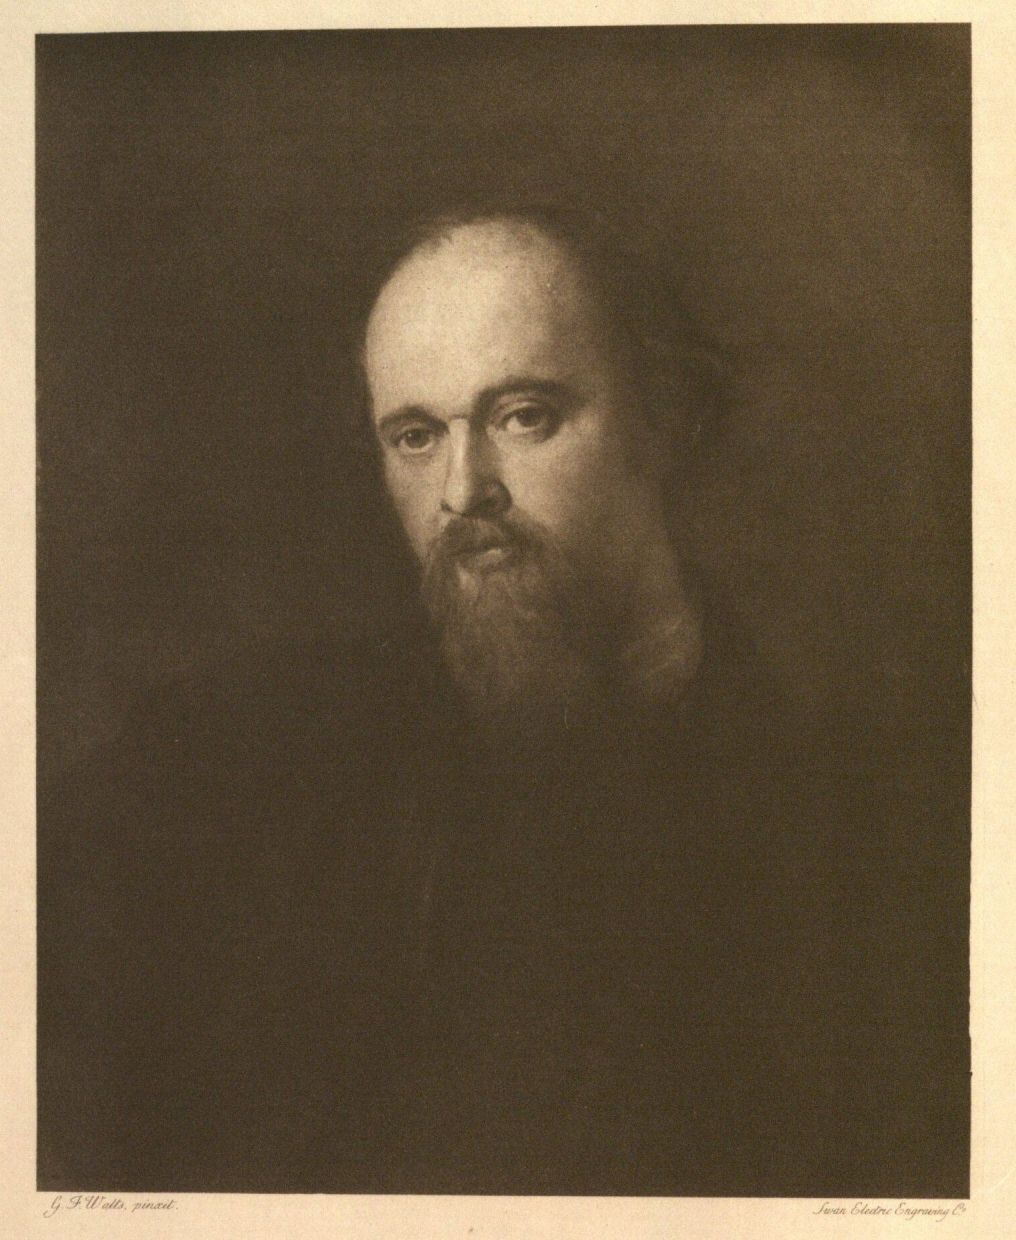 Photogravure of Dante Gabriel Rossetty by G. F. Watts.